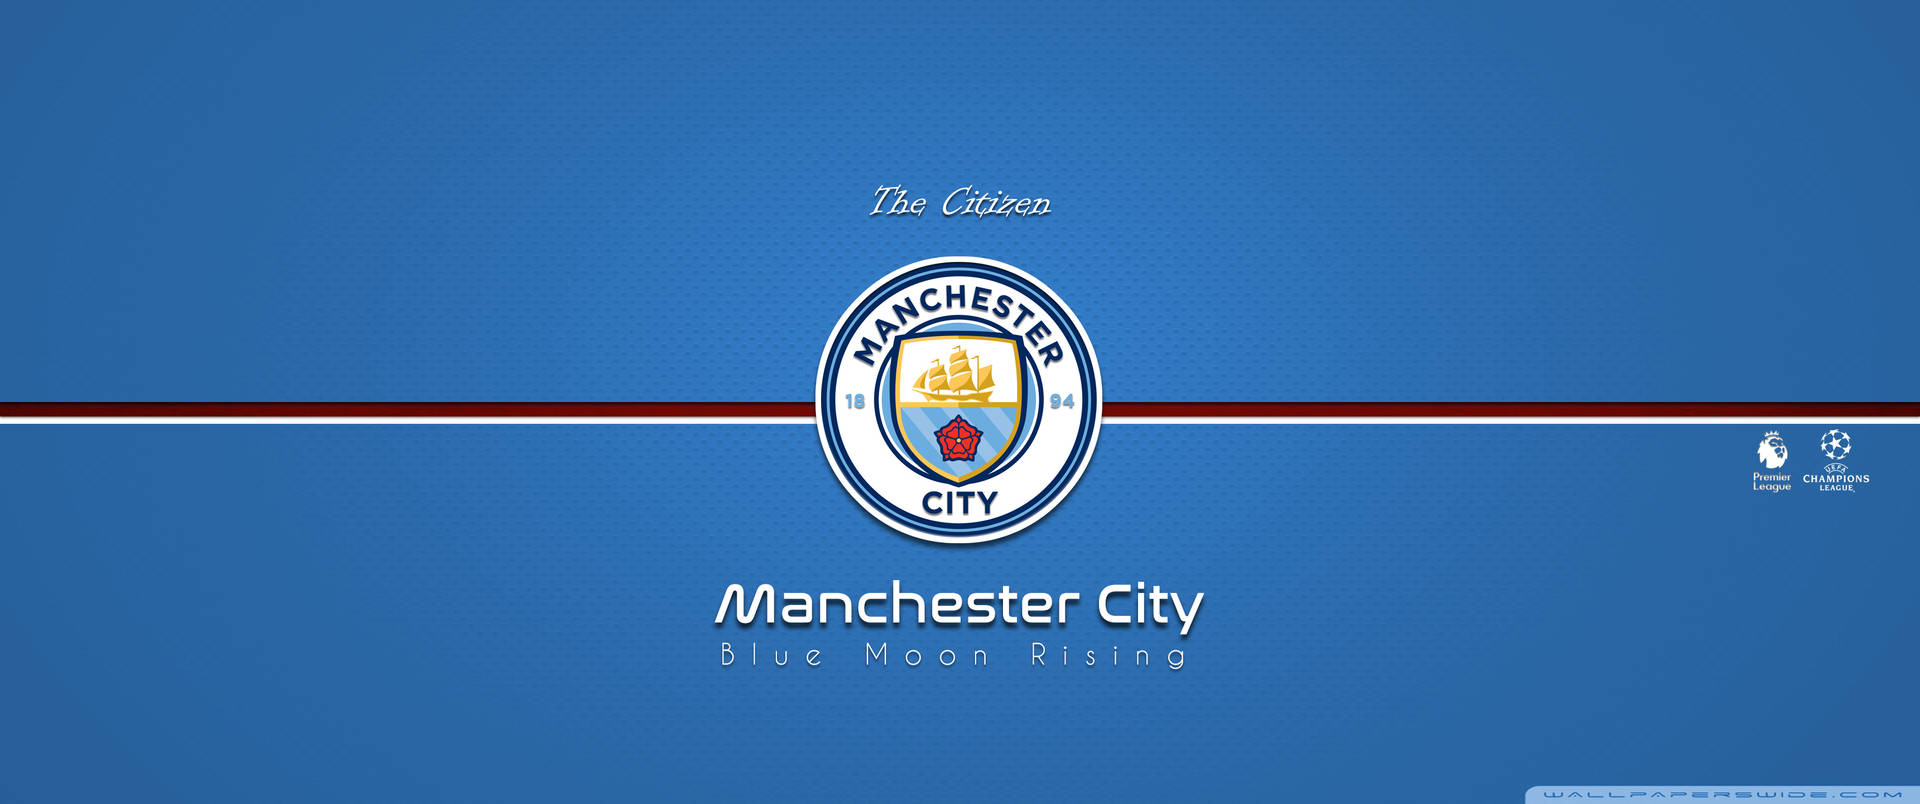 Manchester City 4k Blue Moon Rising Wallpaper